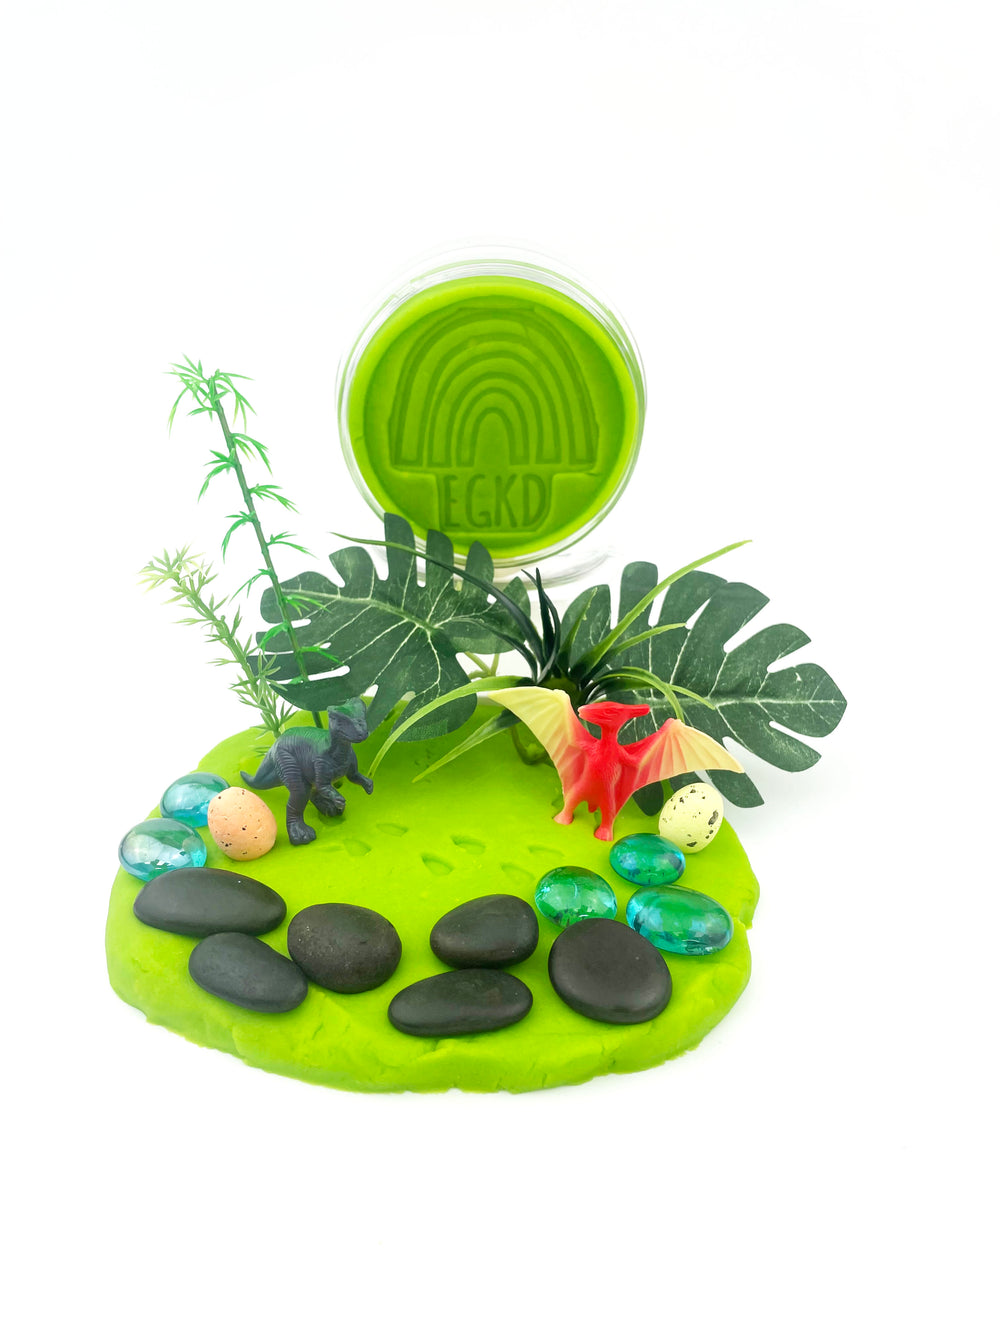 EGKD Dinosaur Jungle Sensory Dough Play Kit by Earth Grown KidDoughs